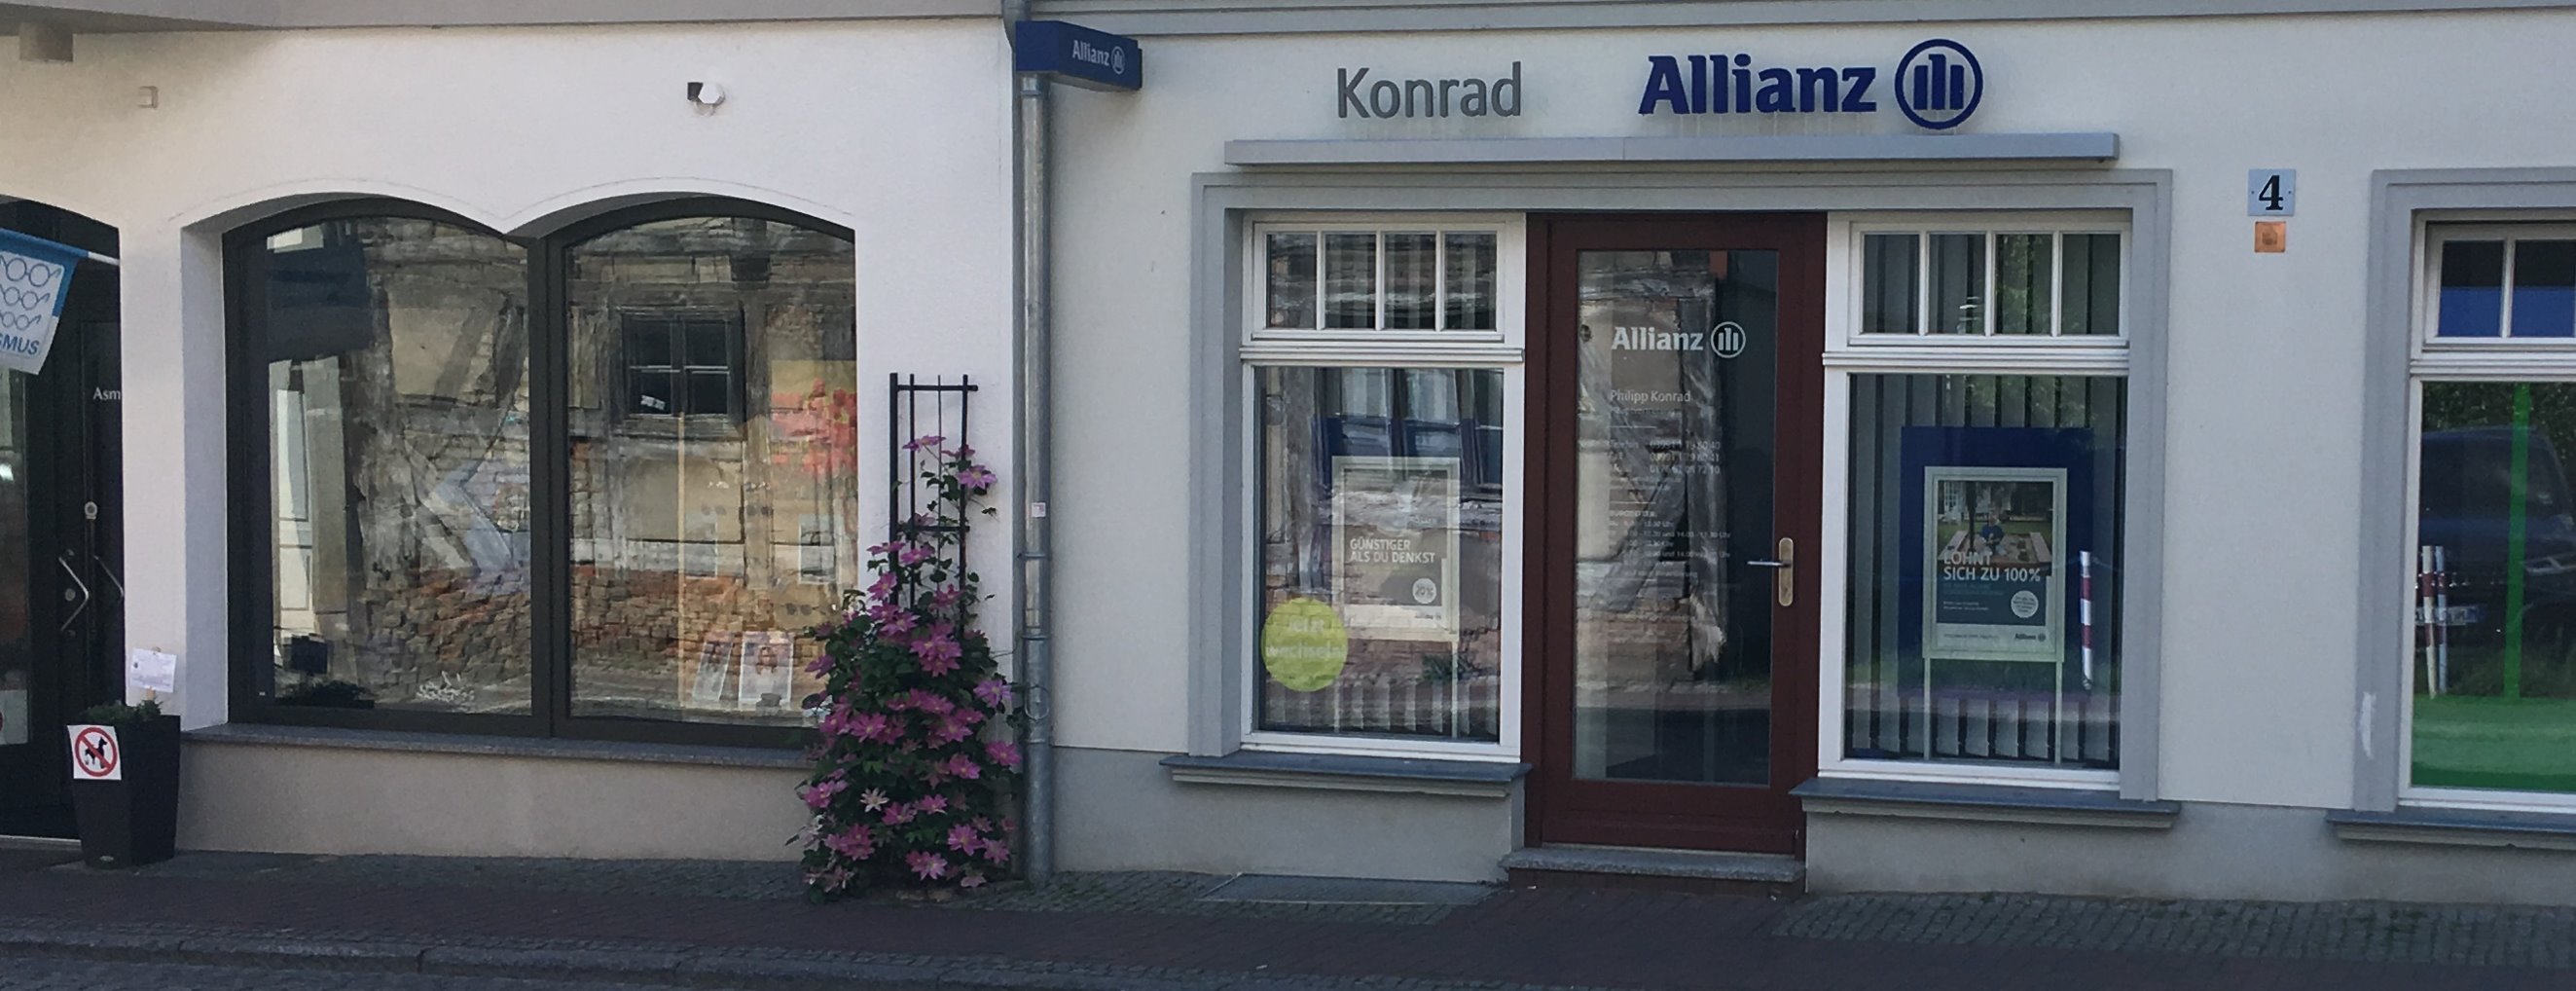 Allianz Versicherung Philipp Konrad Waren Müritz - Allianz-Agentur-Konrad